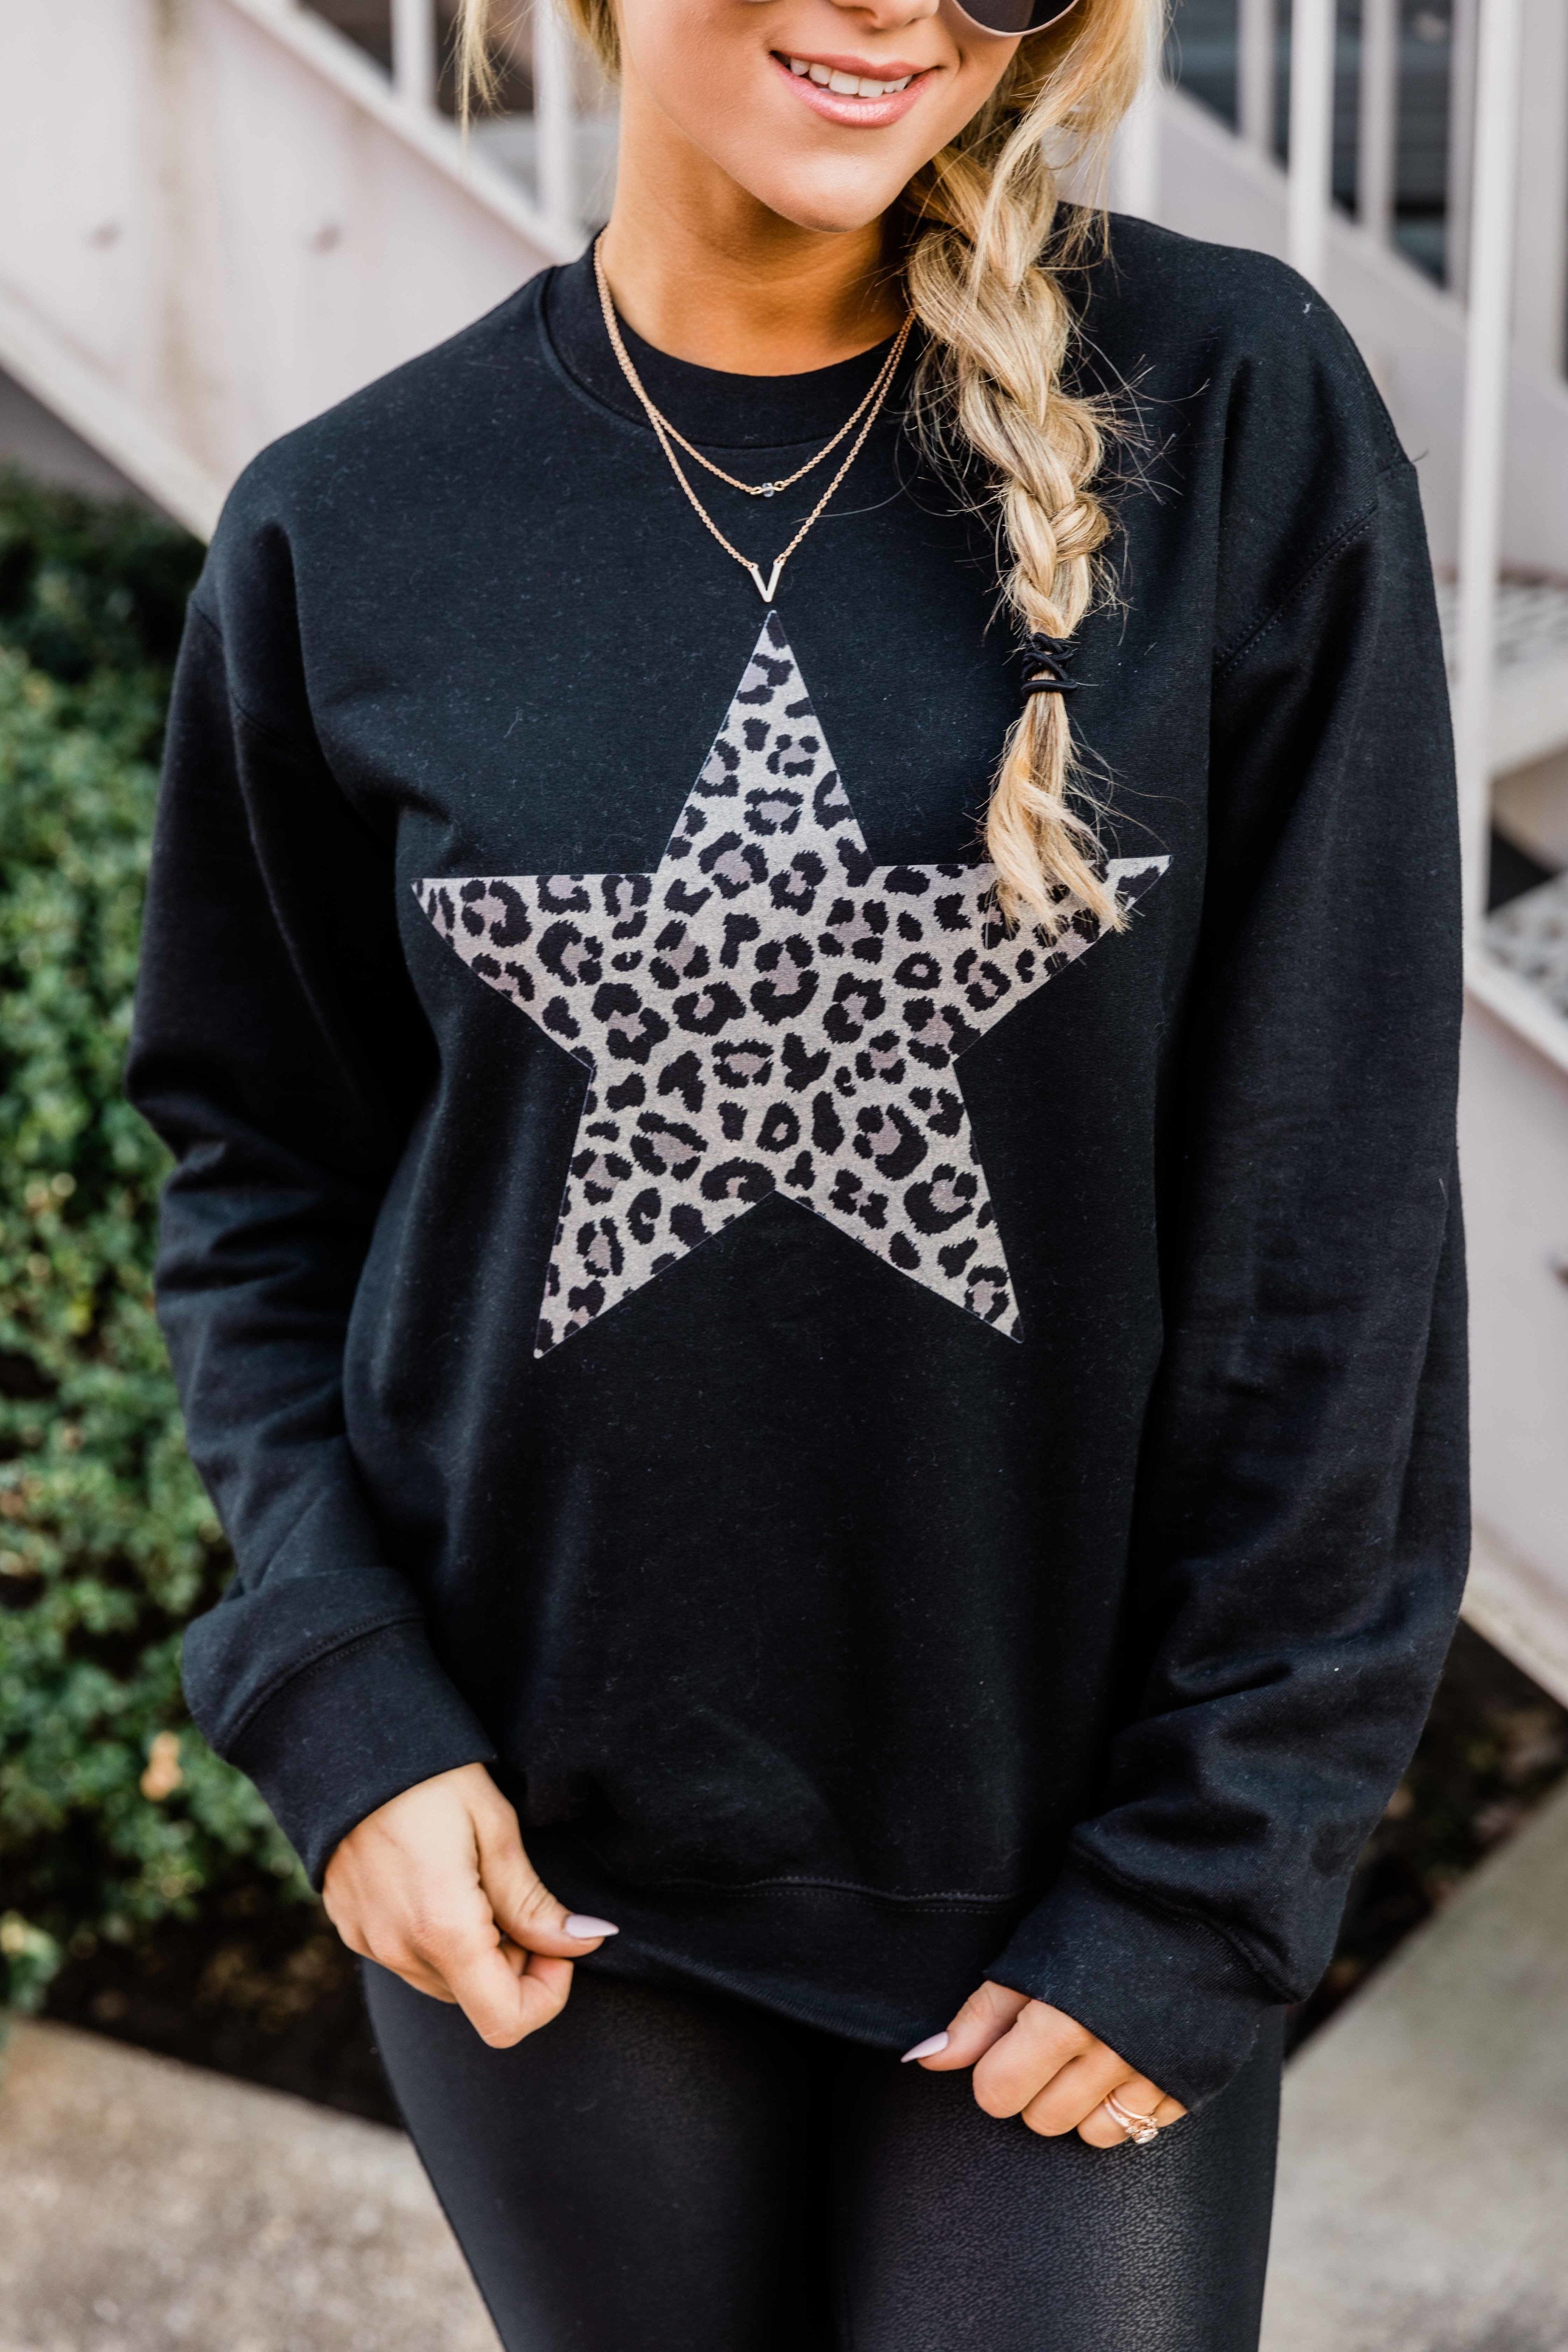 Animal Print Star Black Graphic Sweatshirt